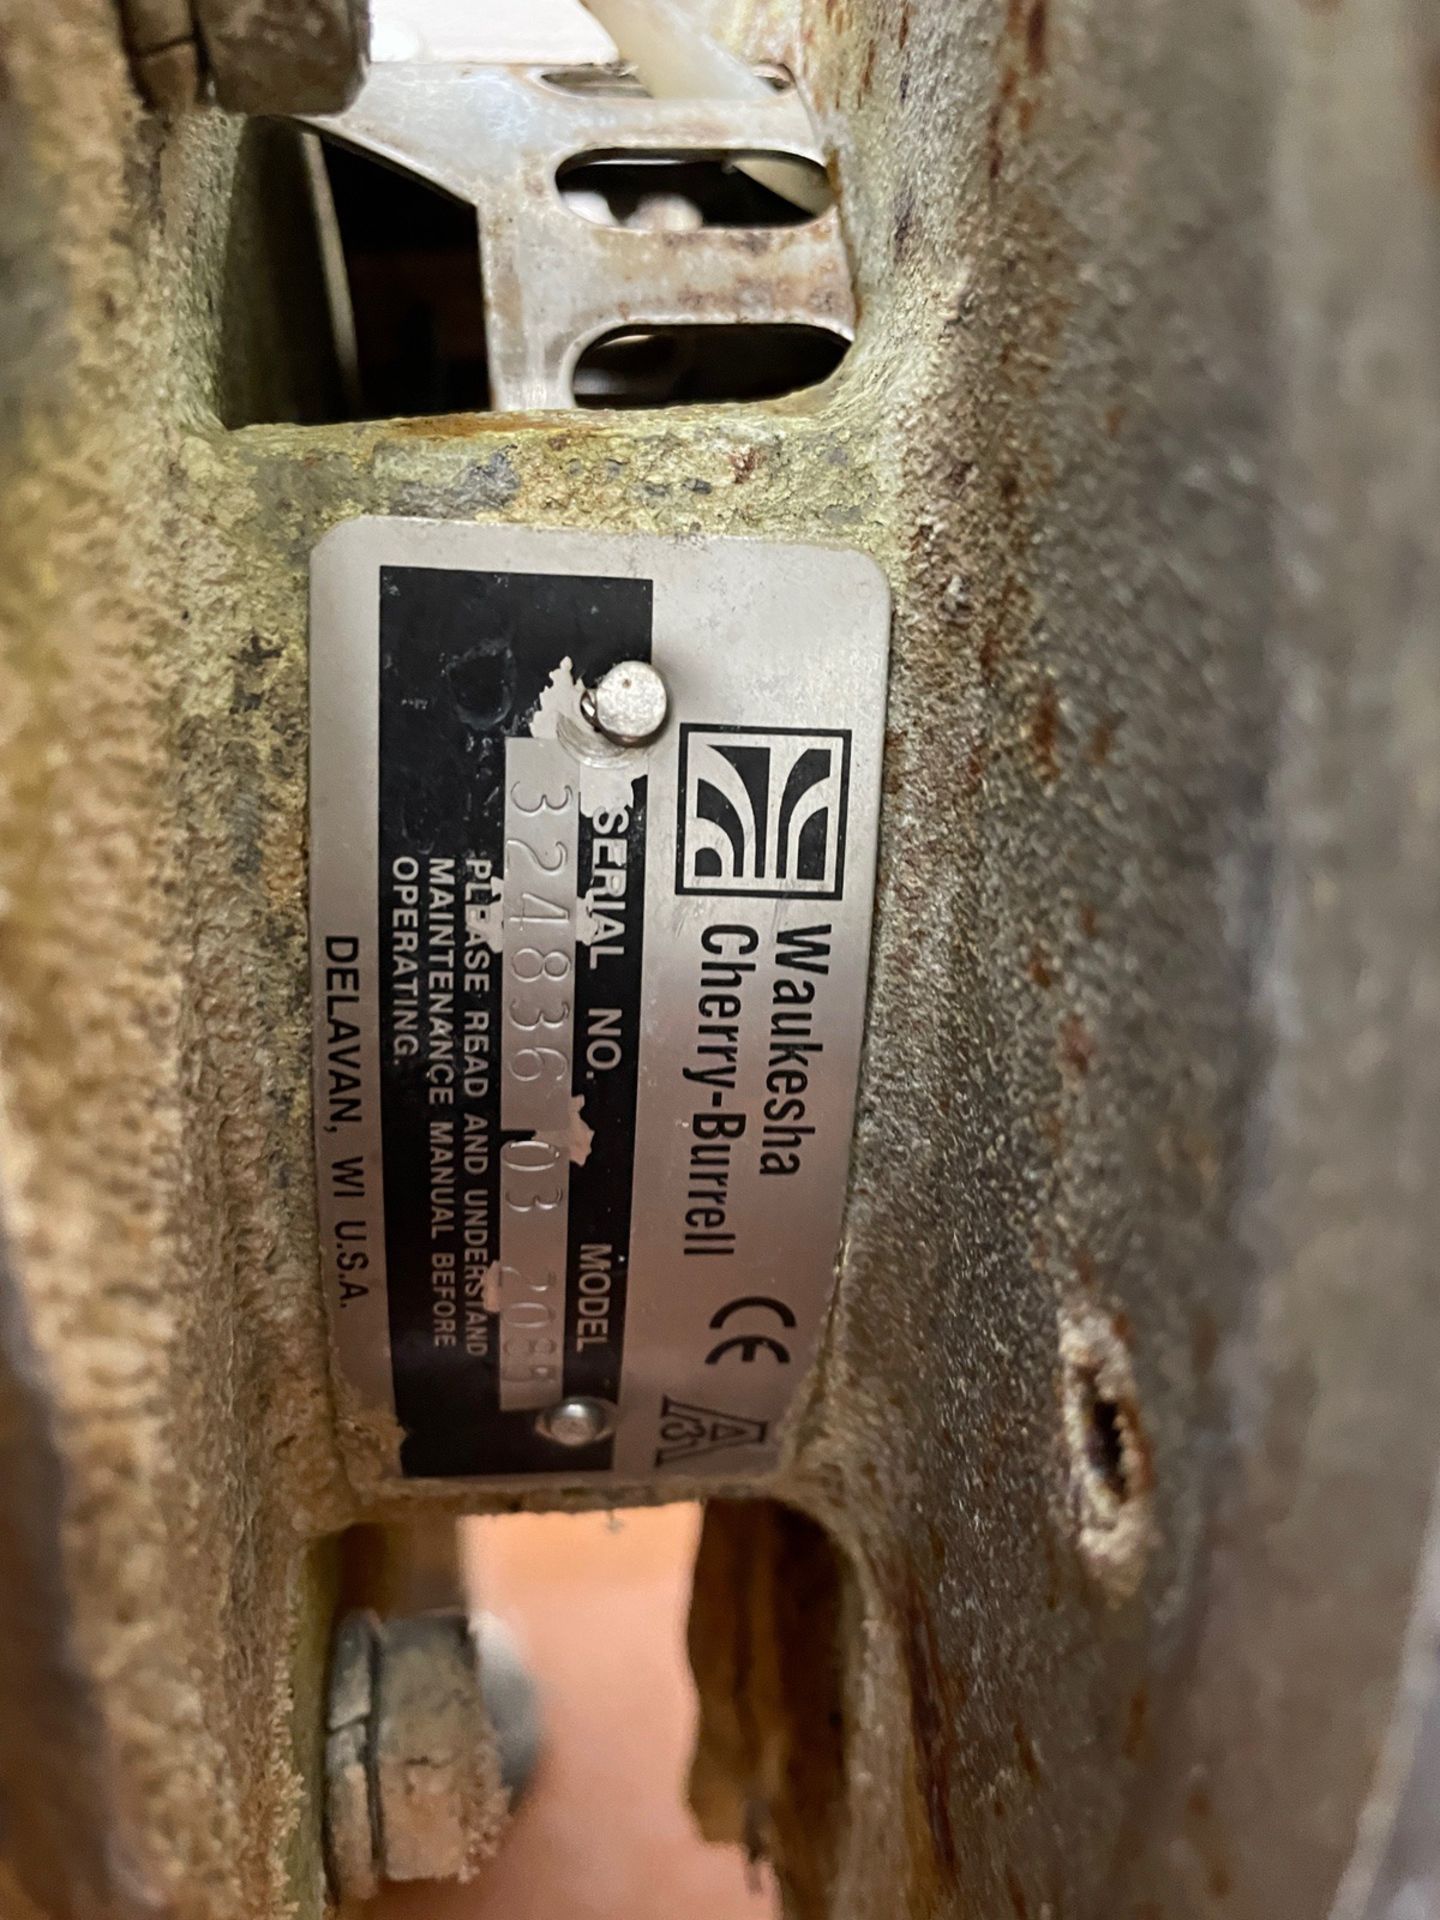 Waukesha Cherry Burrell Centrifugal Pump, 7.5 HP, Model 2085, S/N: 324836-03 | Rig Fee: $150 - Image 2 of 3